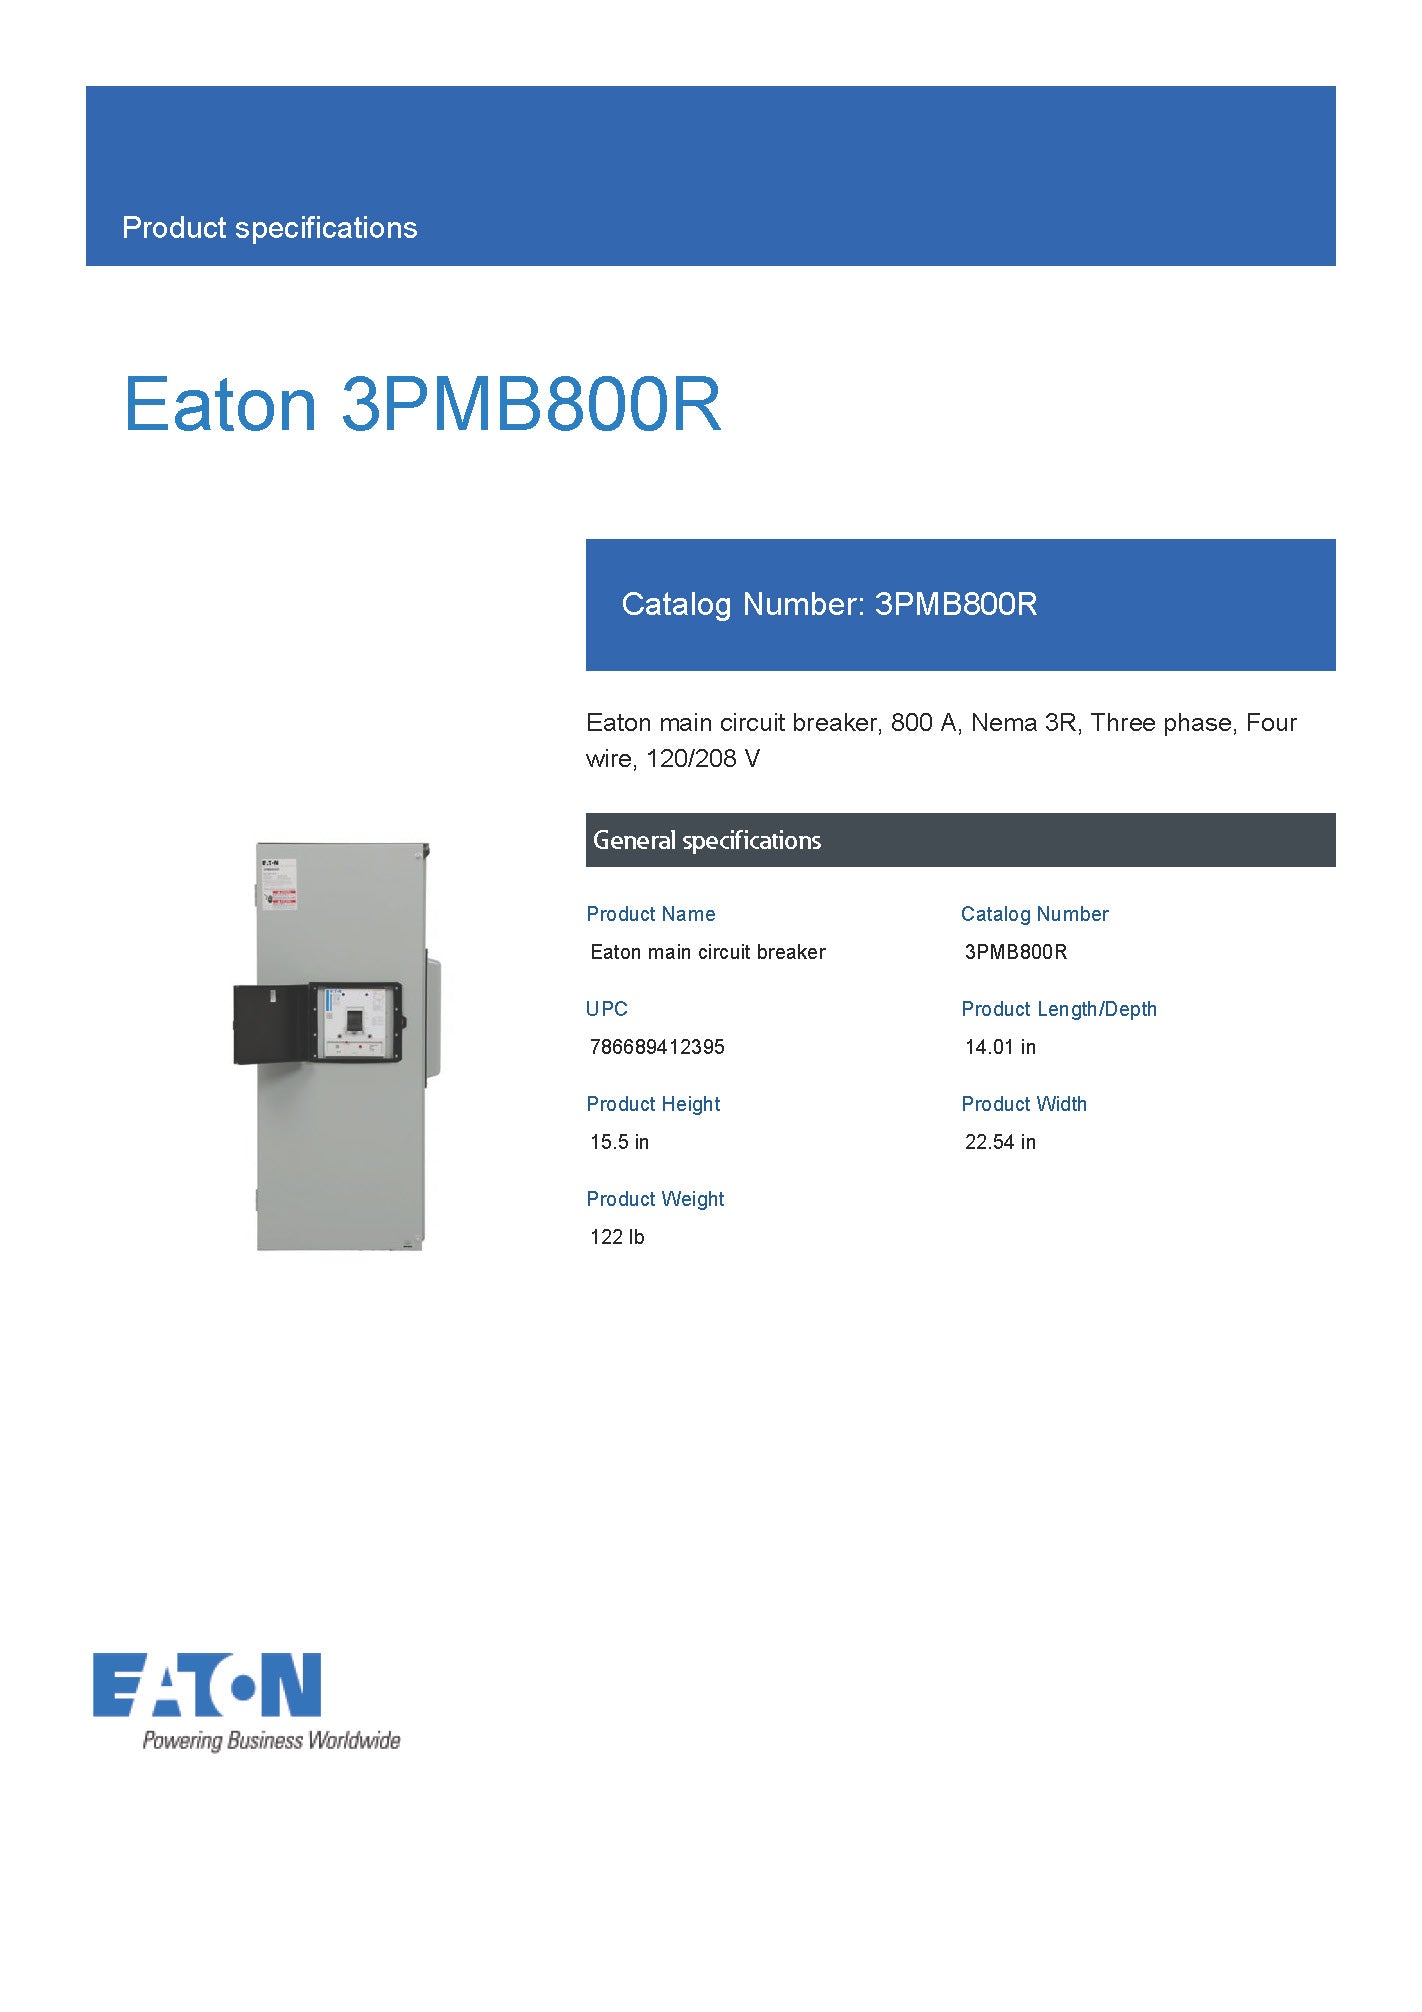 Eaton 3PMB800R 3PH 800A Main Disconnect for Modular Metering